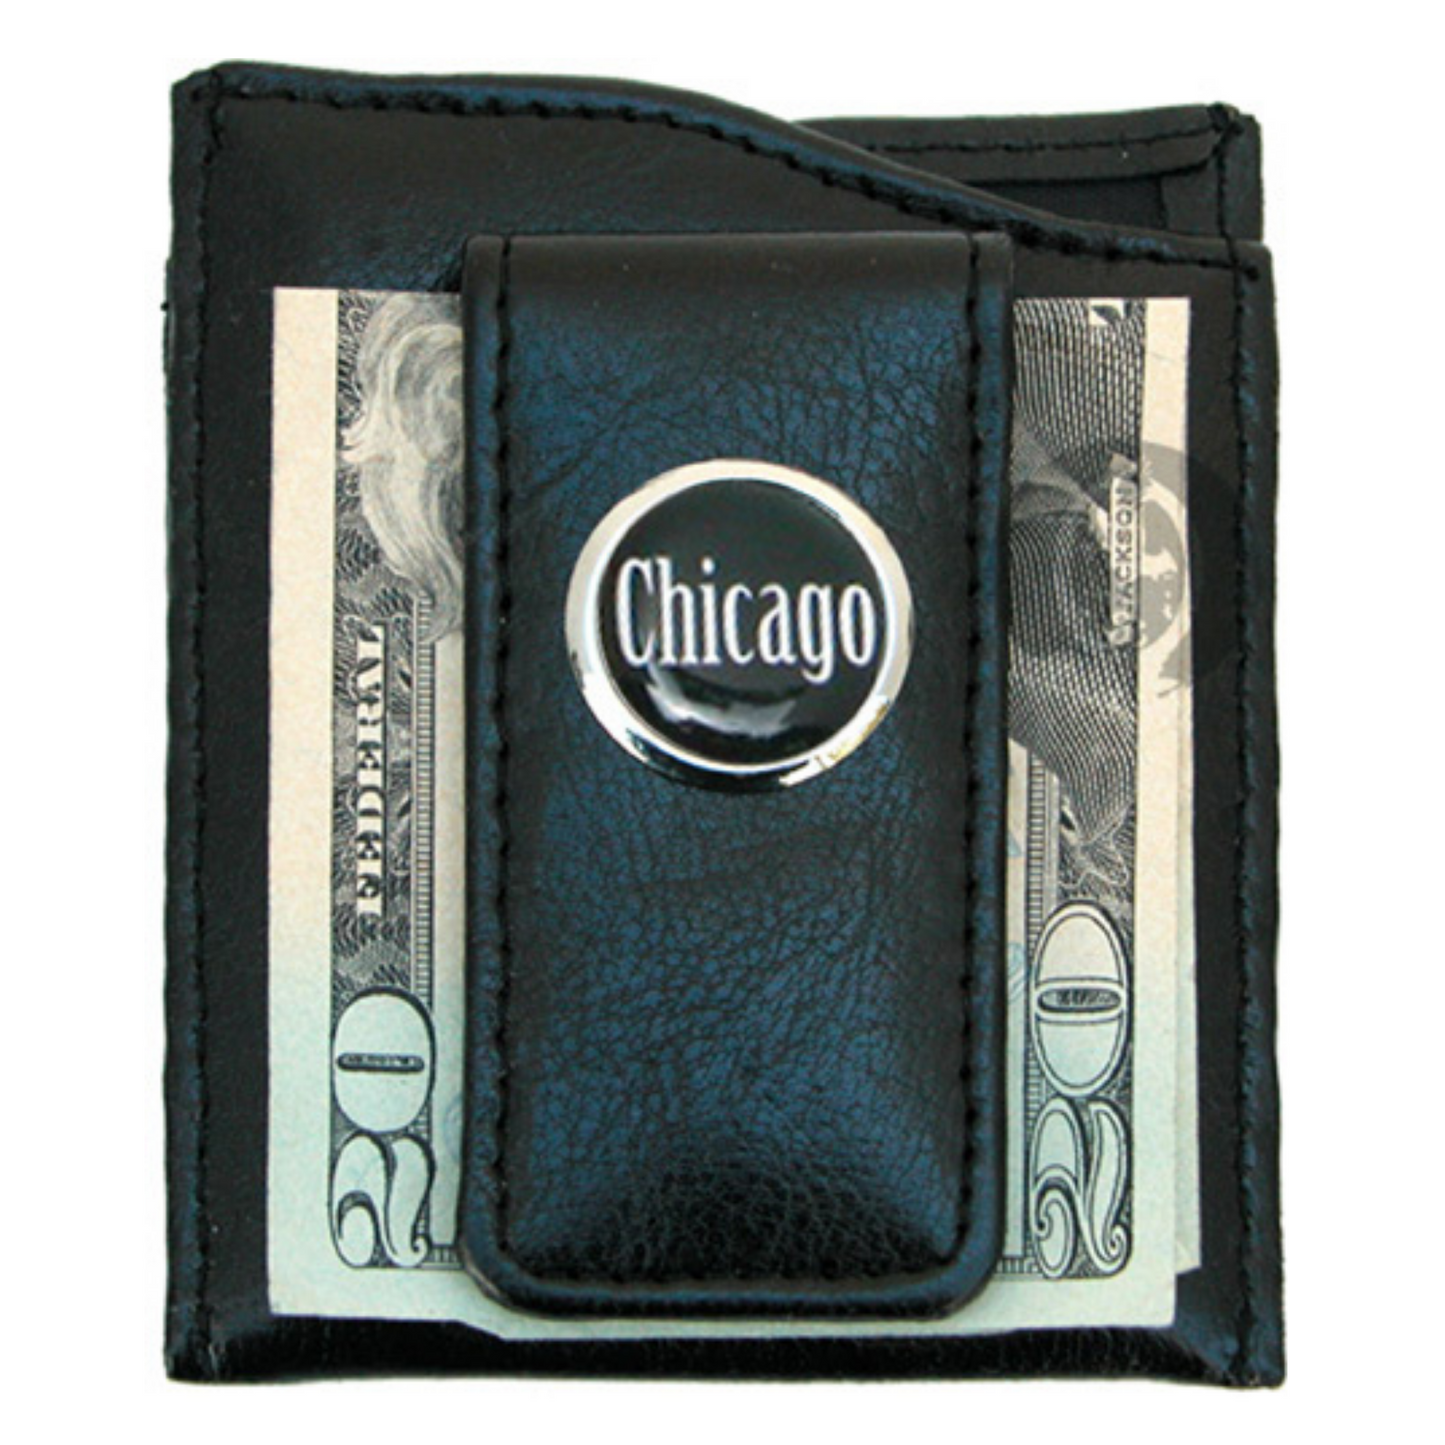 Chicago Money Clip